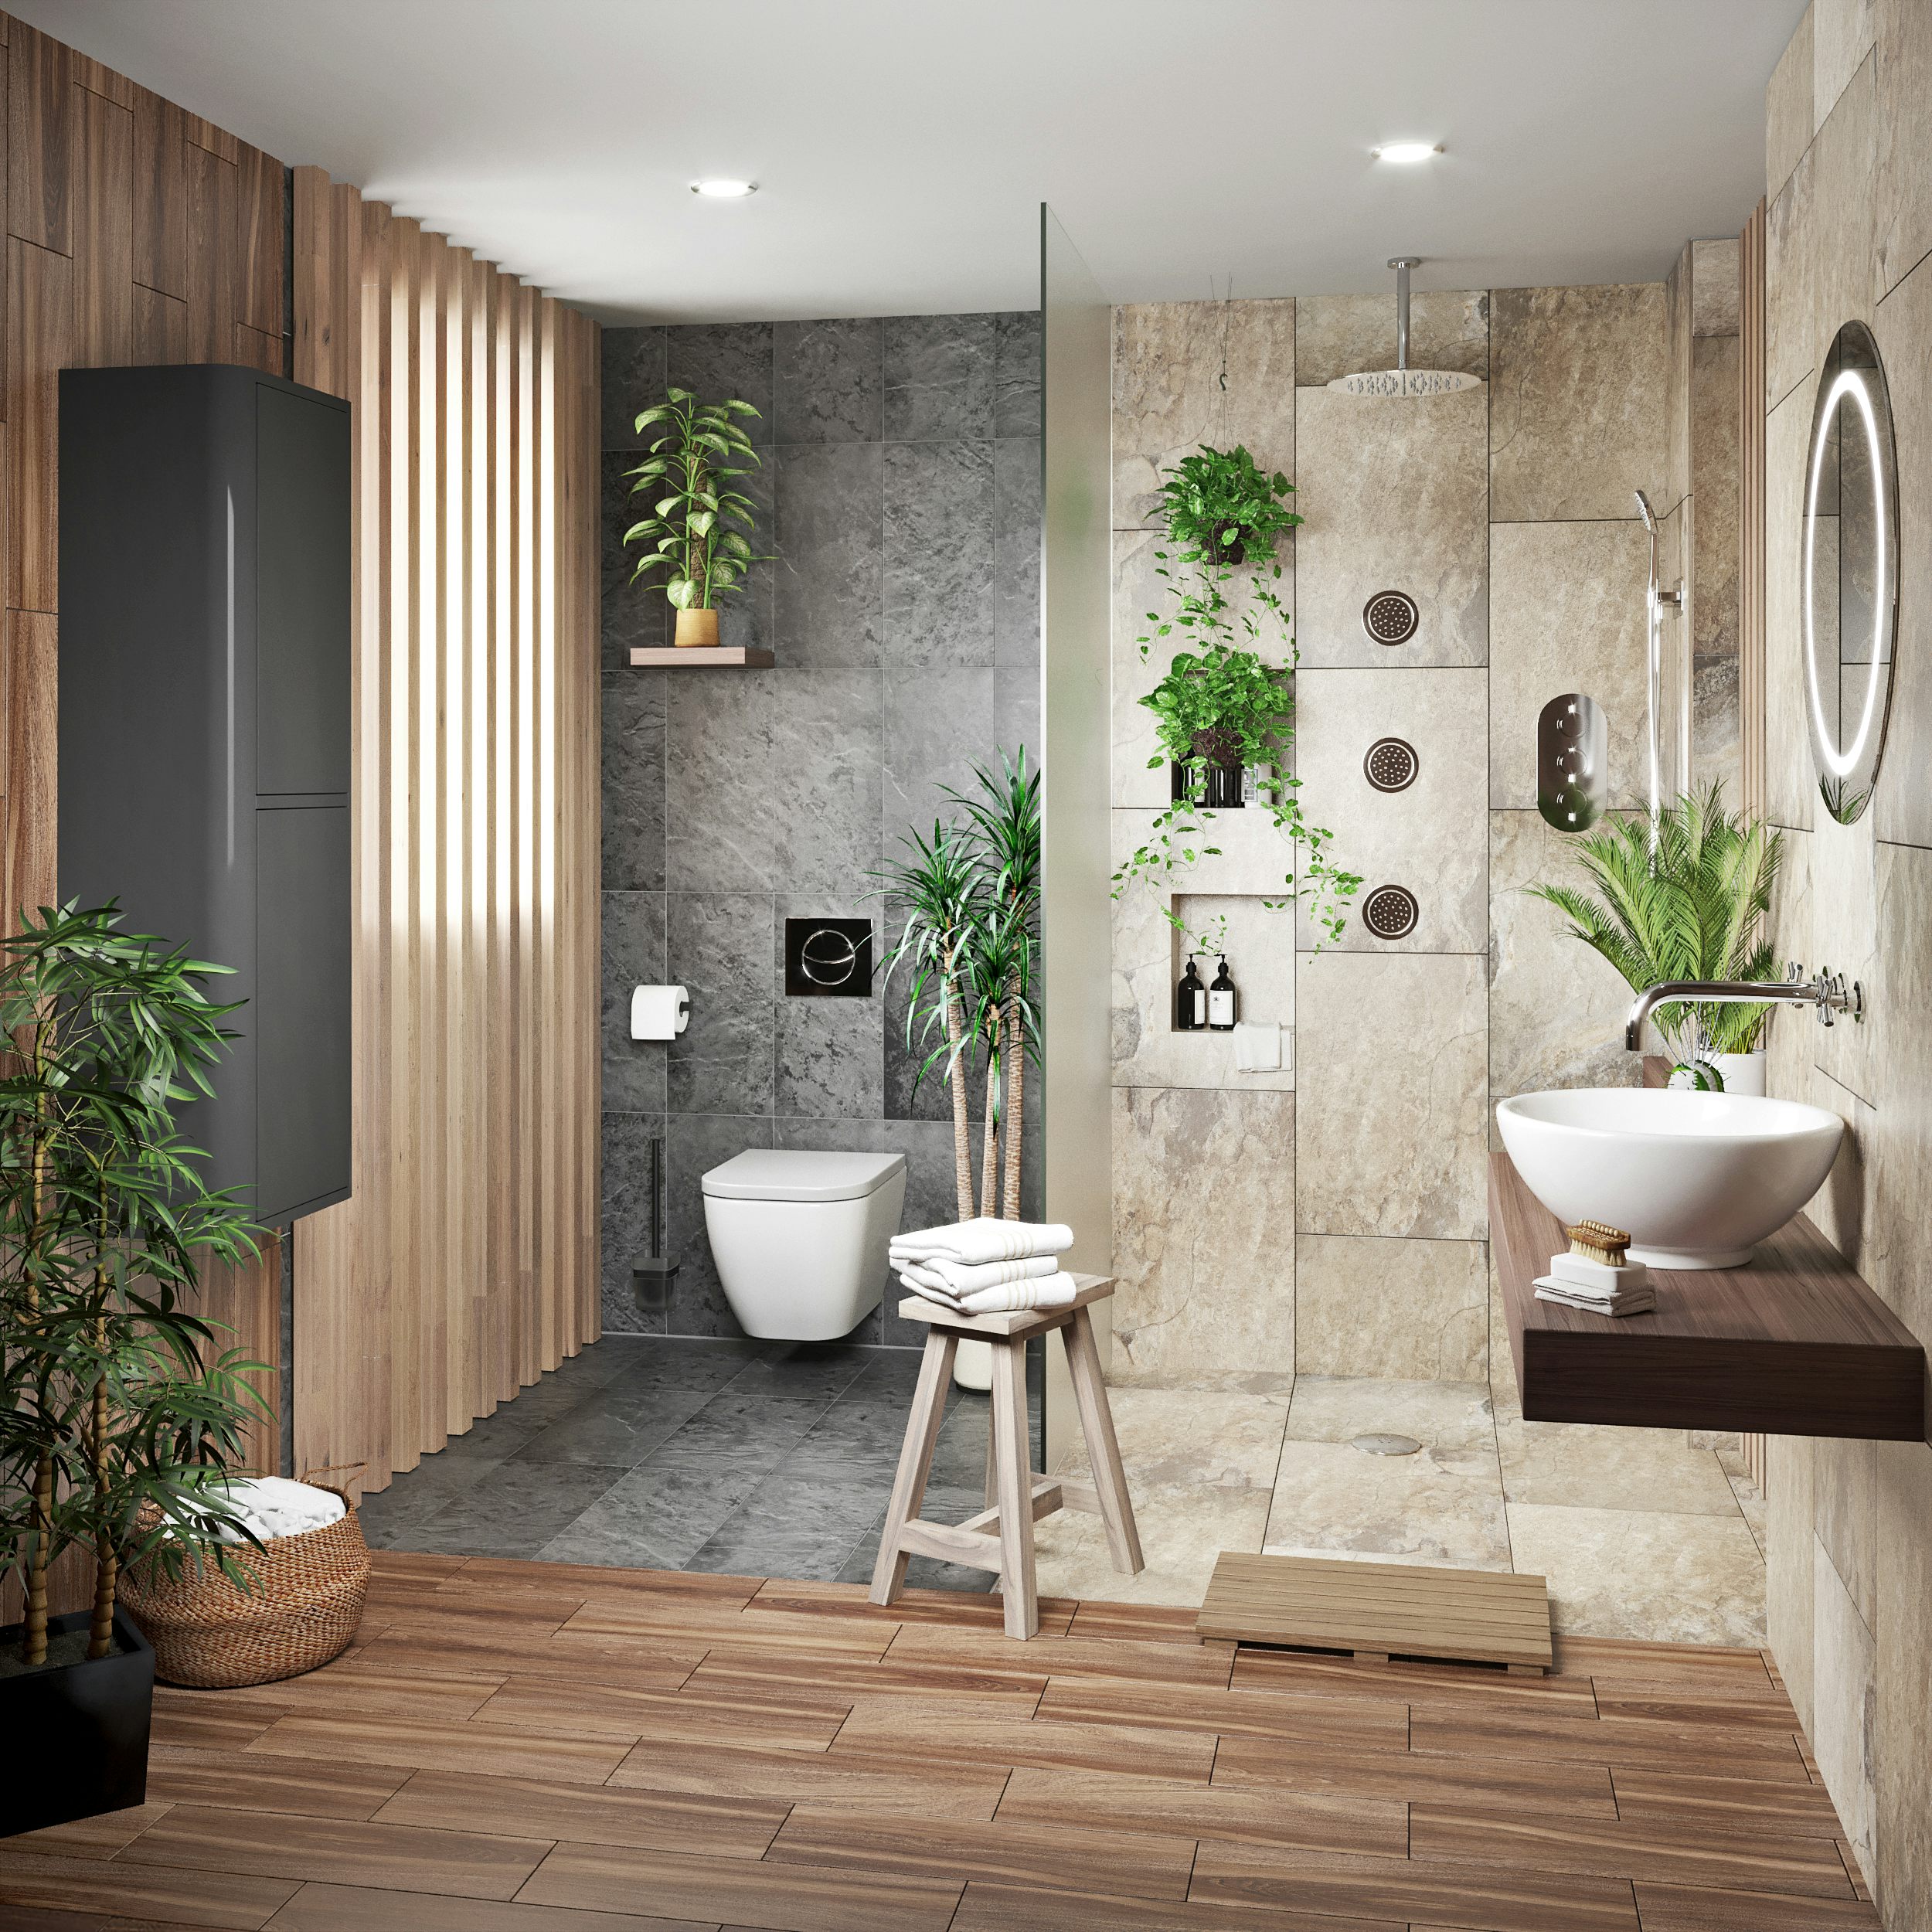 Bathroom ideas: Tropical bathrooms | VictoriaPlum.com